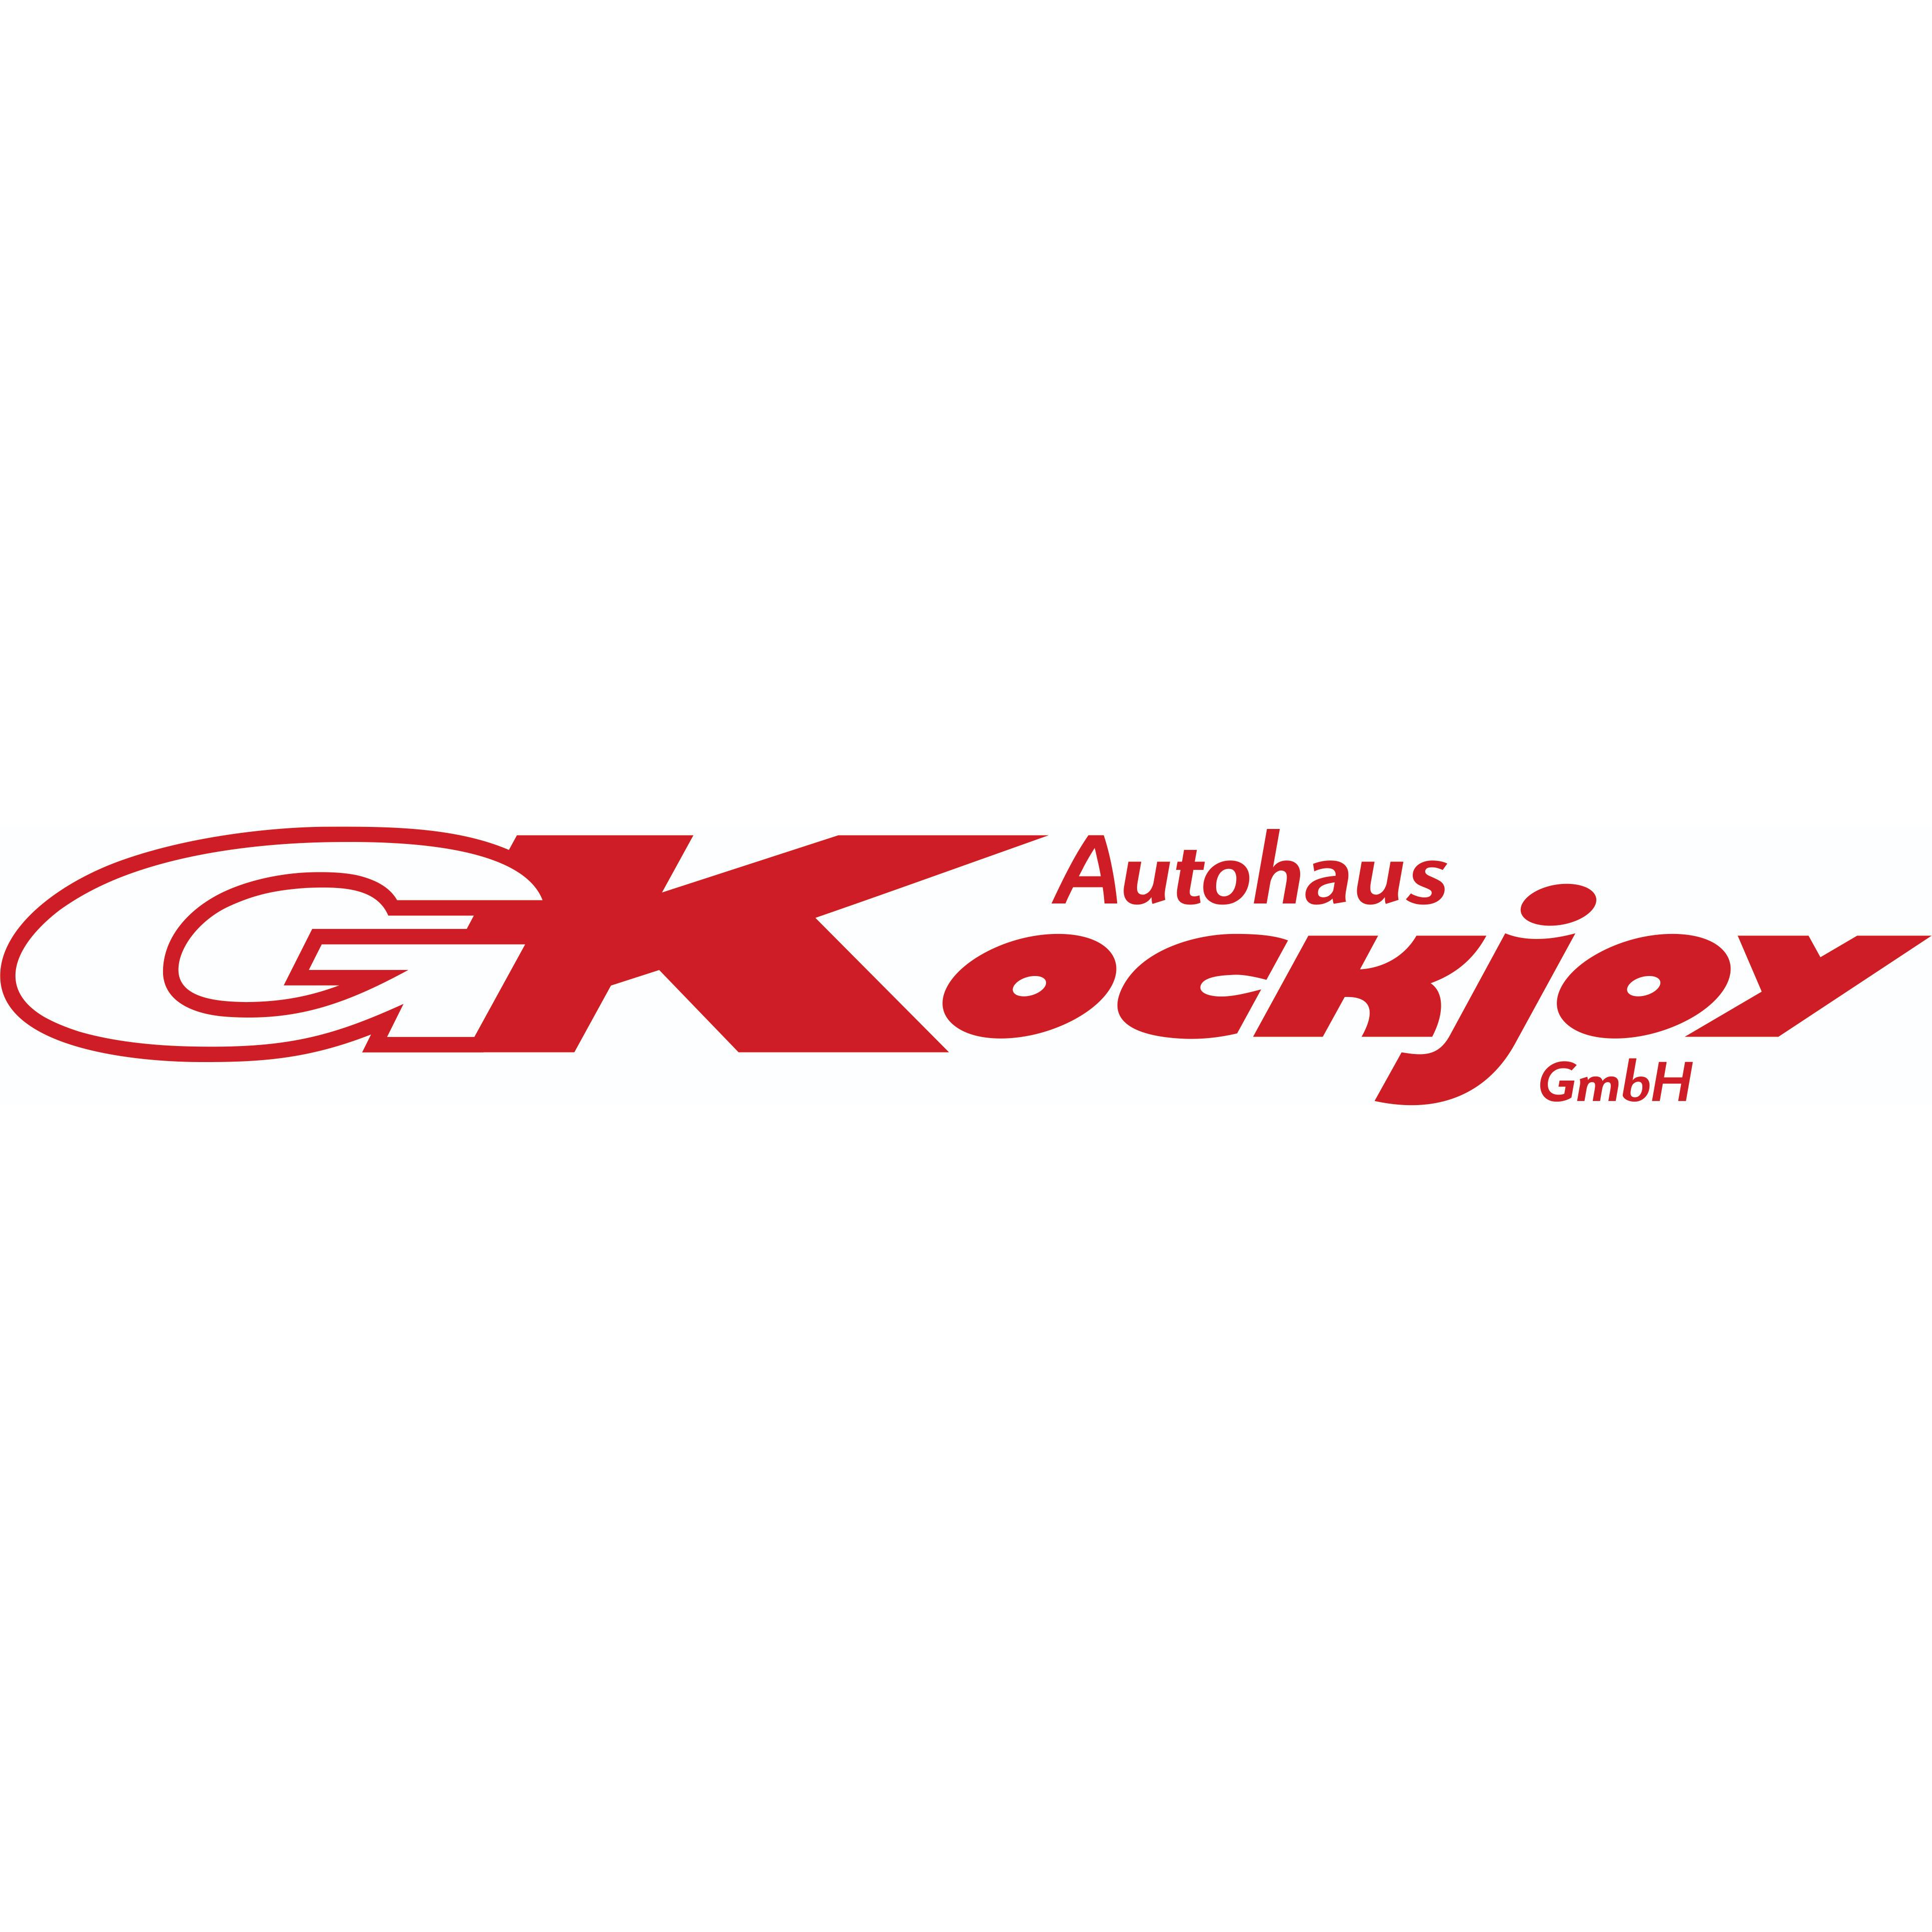 Autohaus Gerhard Kockjoy GmbH in Potsdam - Logo